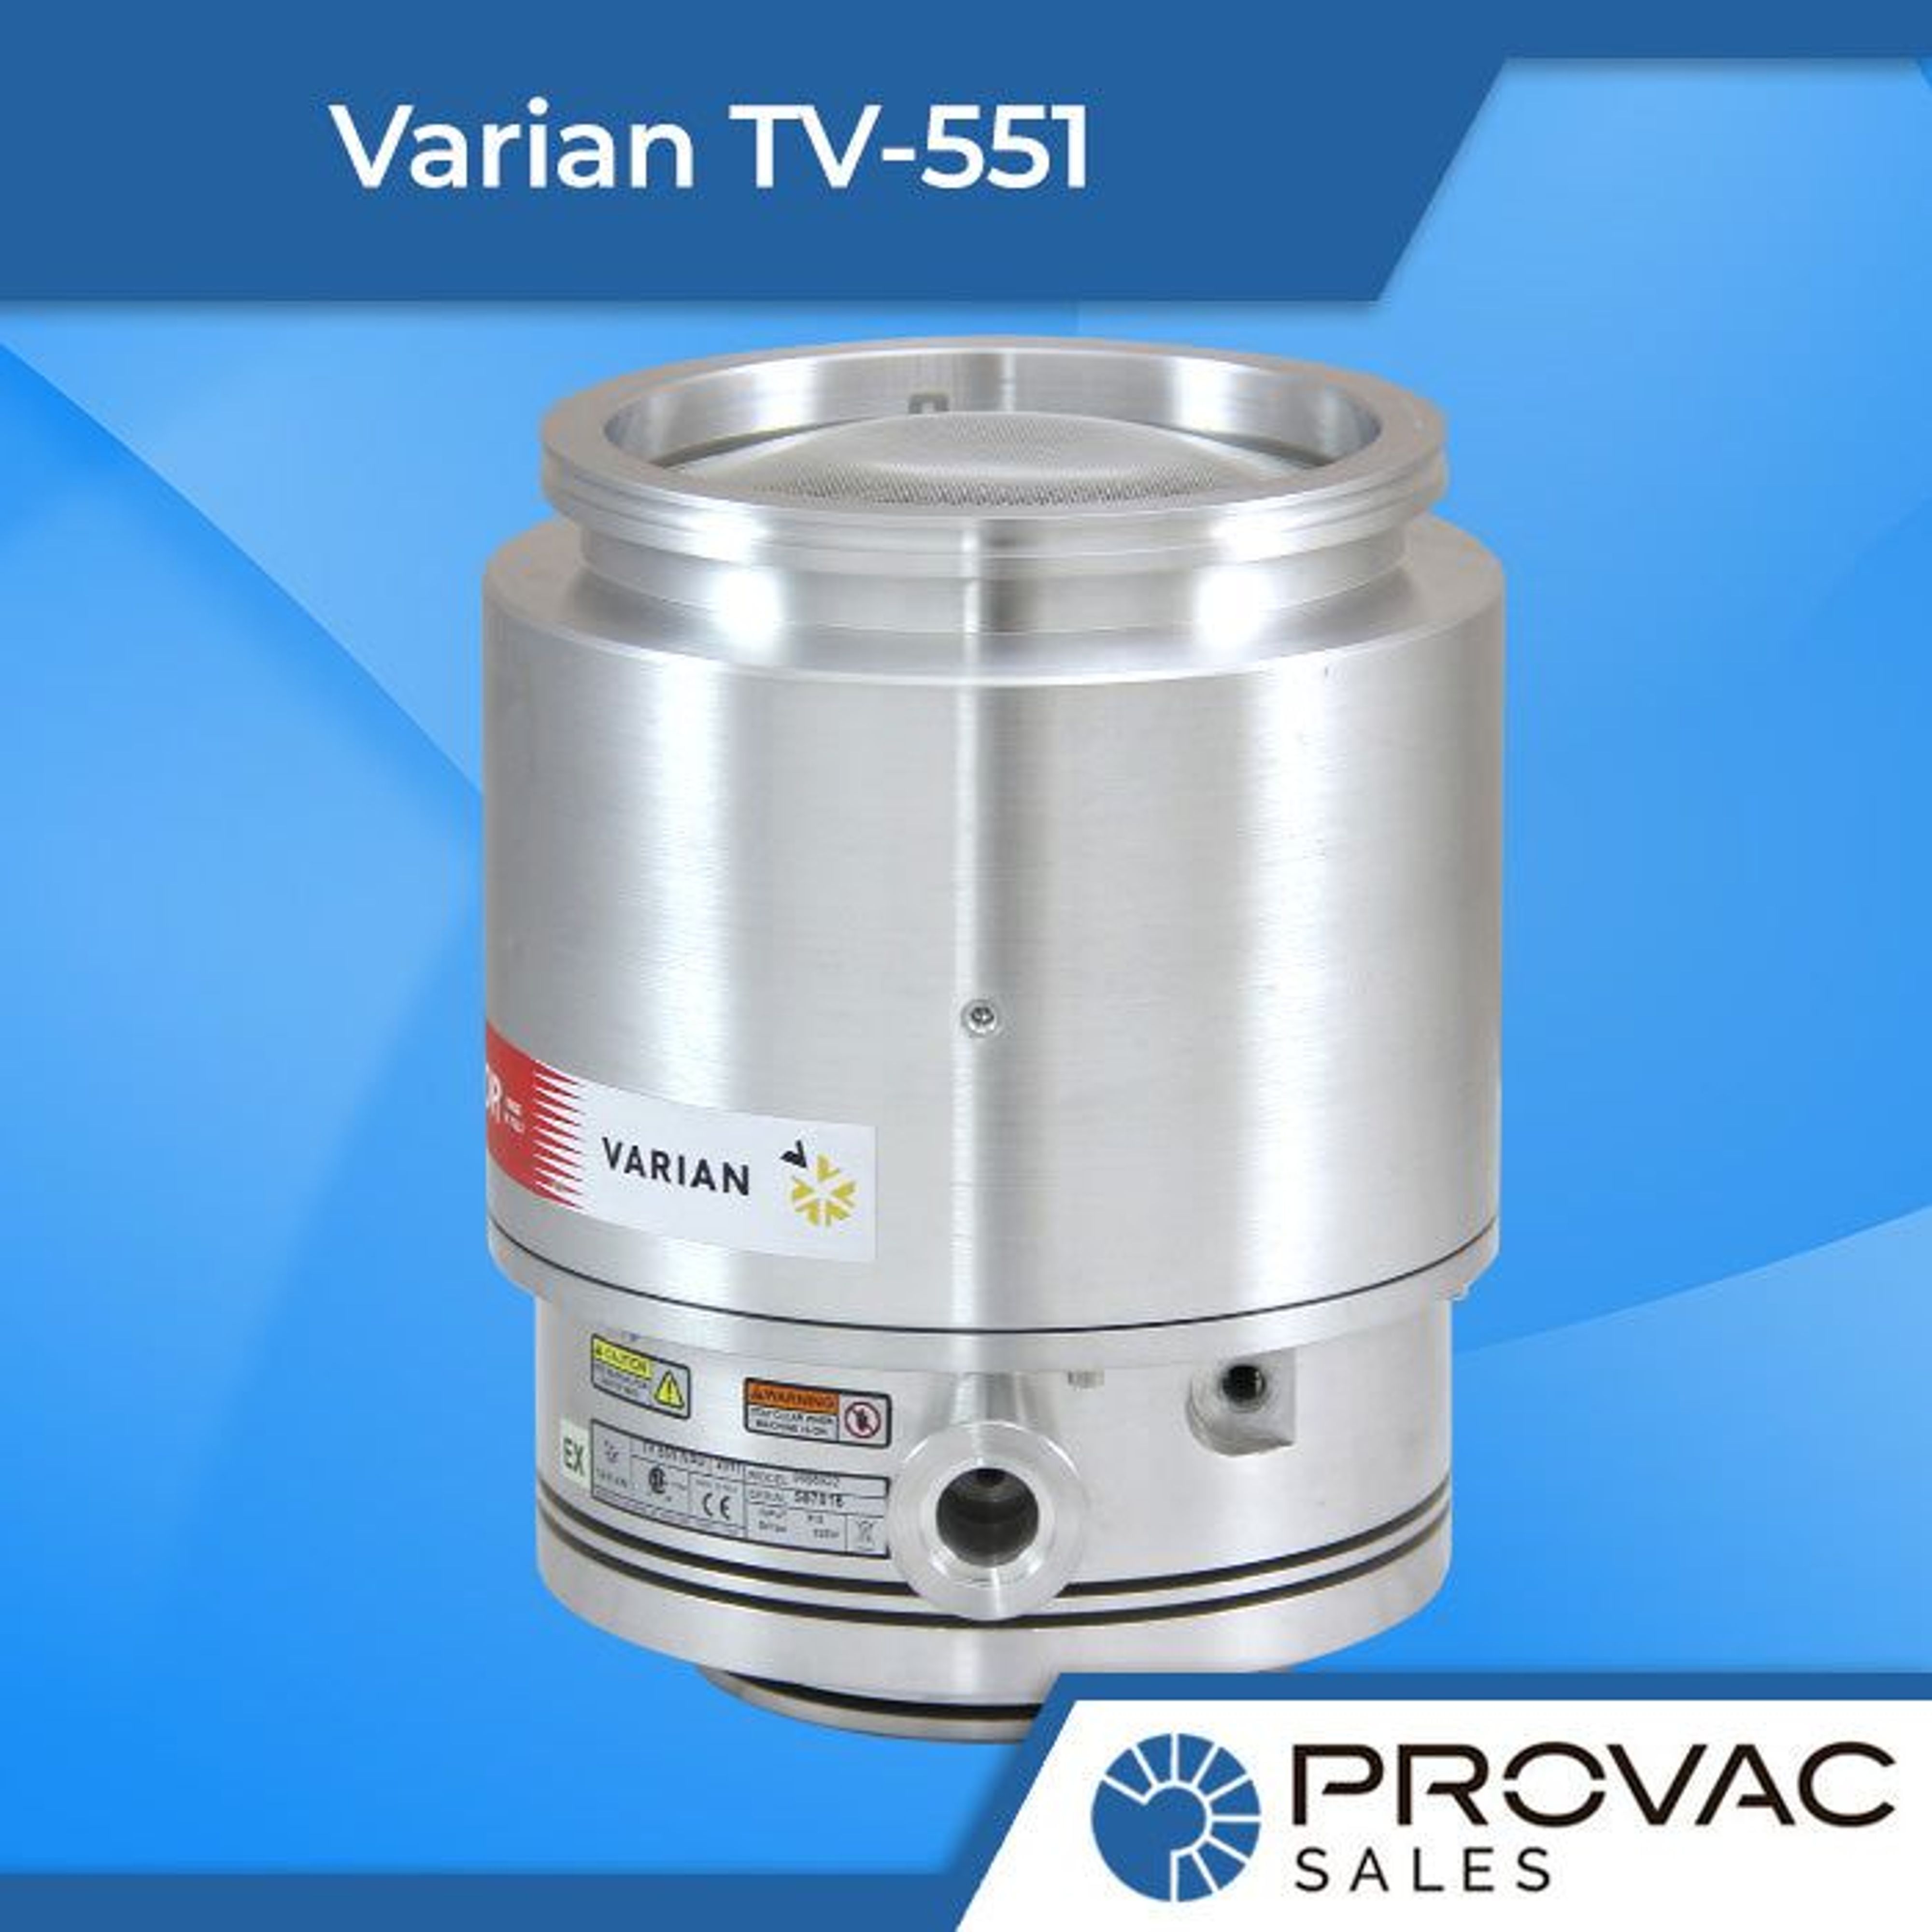 Product Spotlight: Varian TV-551 Turbo Pump Background